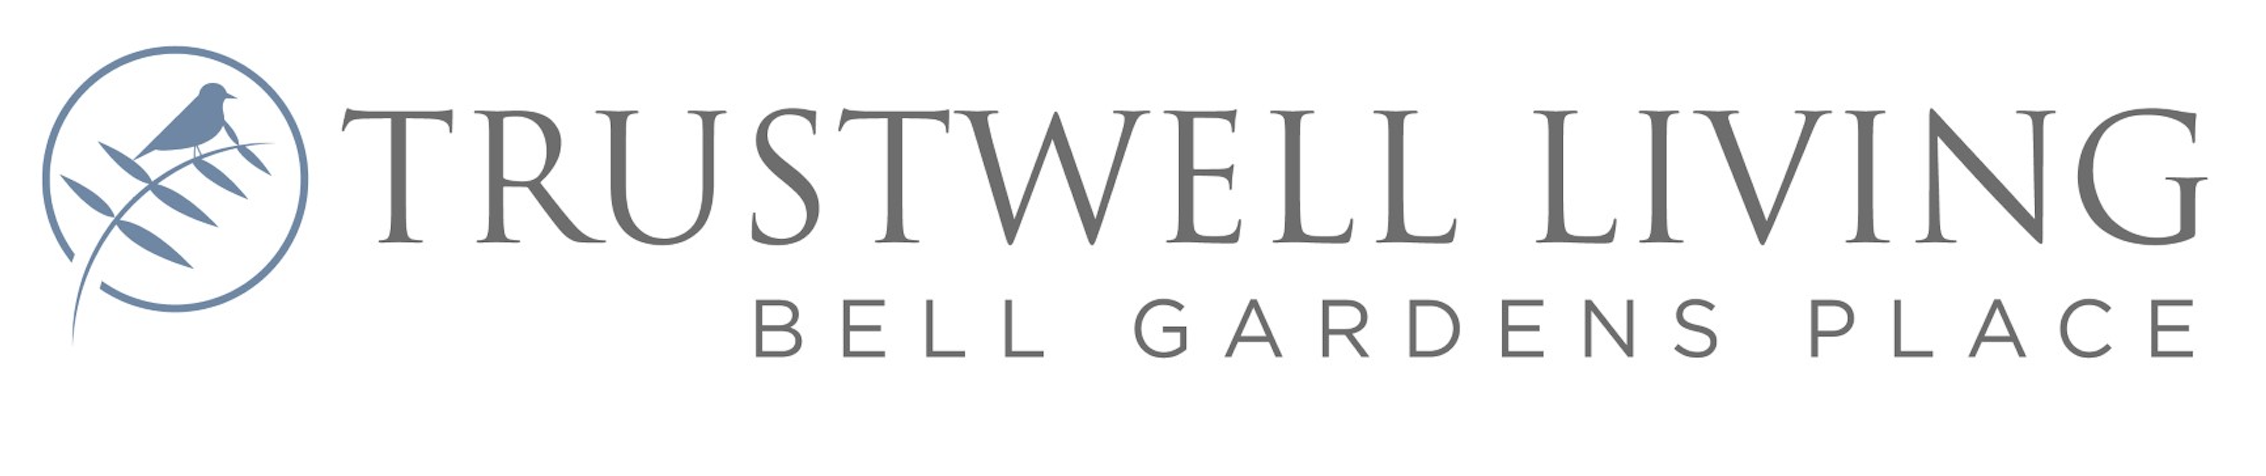 Trustwell Living Bell Gardens Place